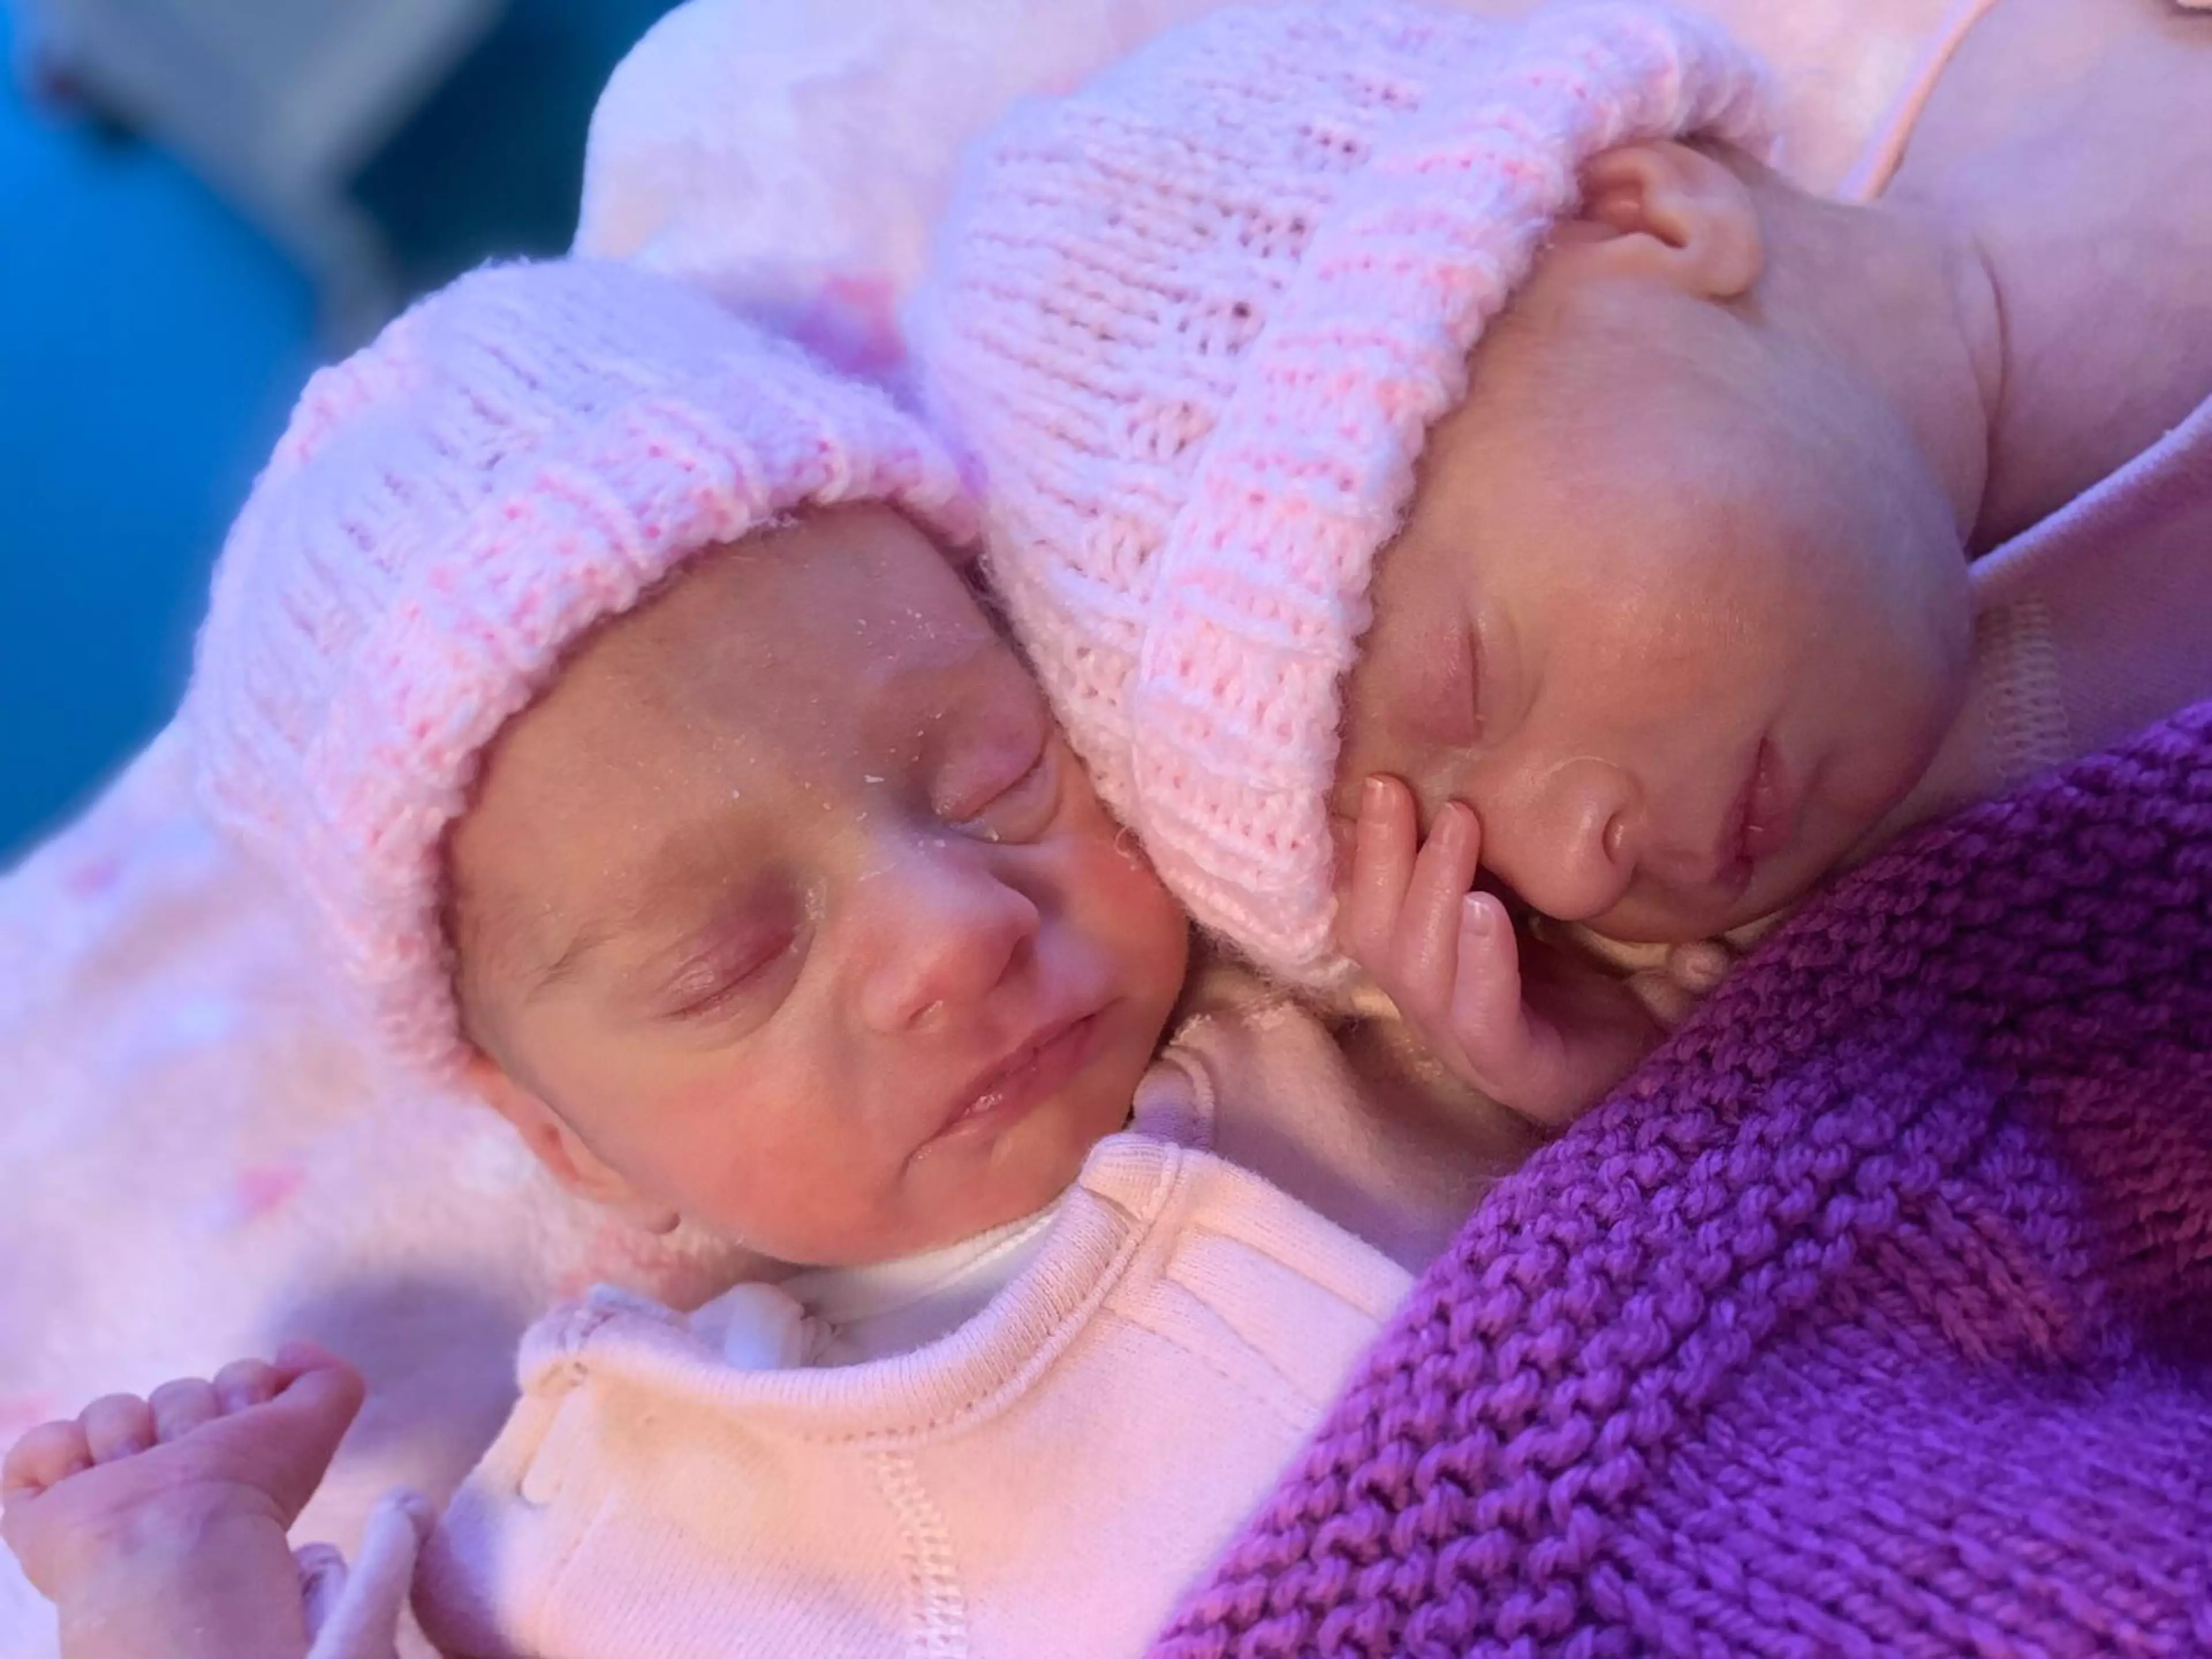 The twins were born via surrogate (